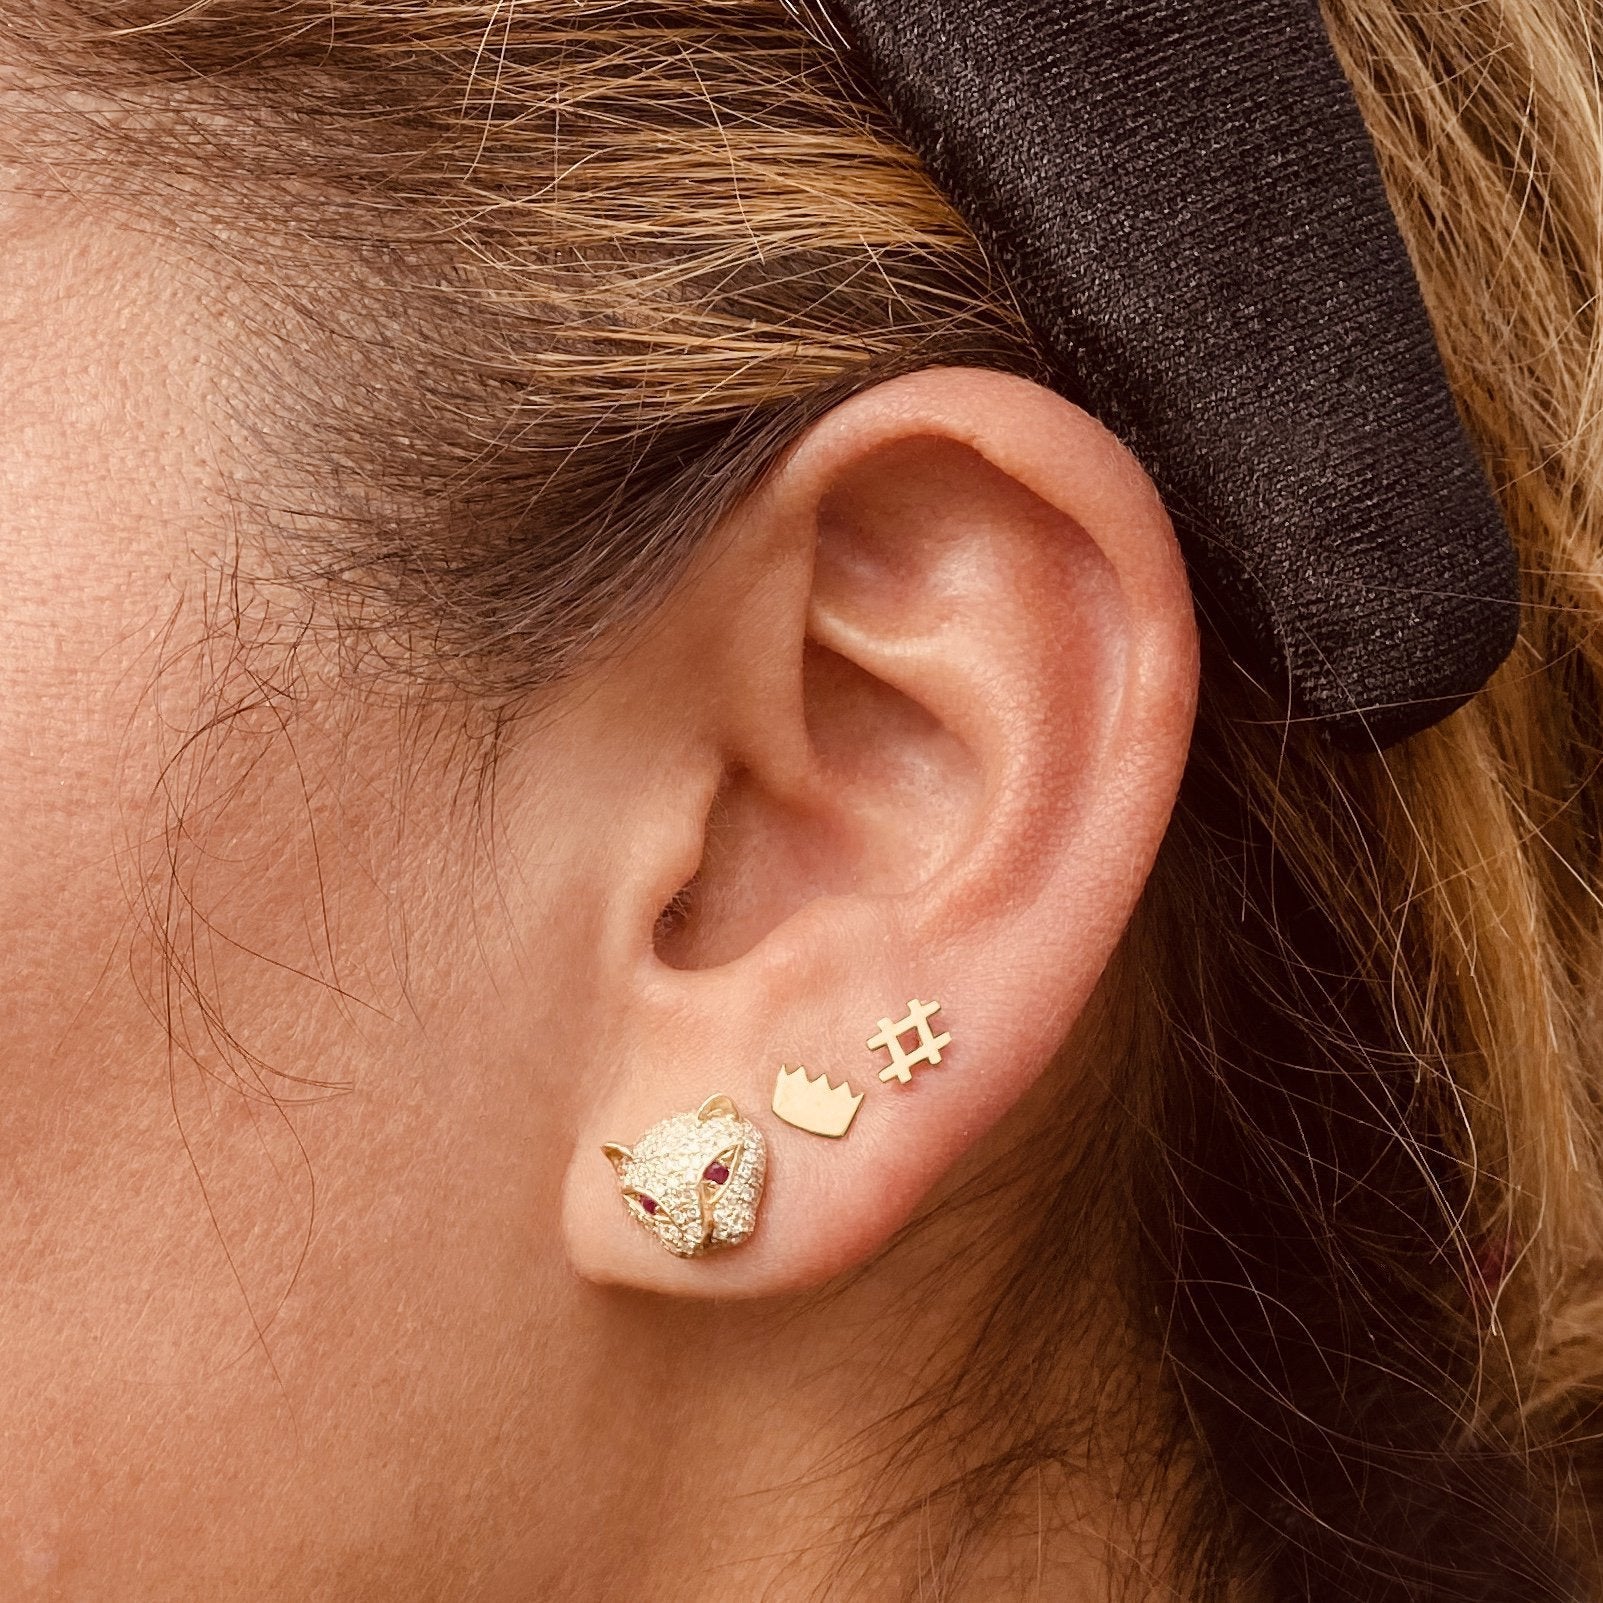 Hashtag Earring in 14k Gold (single earring) - Mazi New York-jewelry